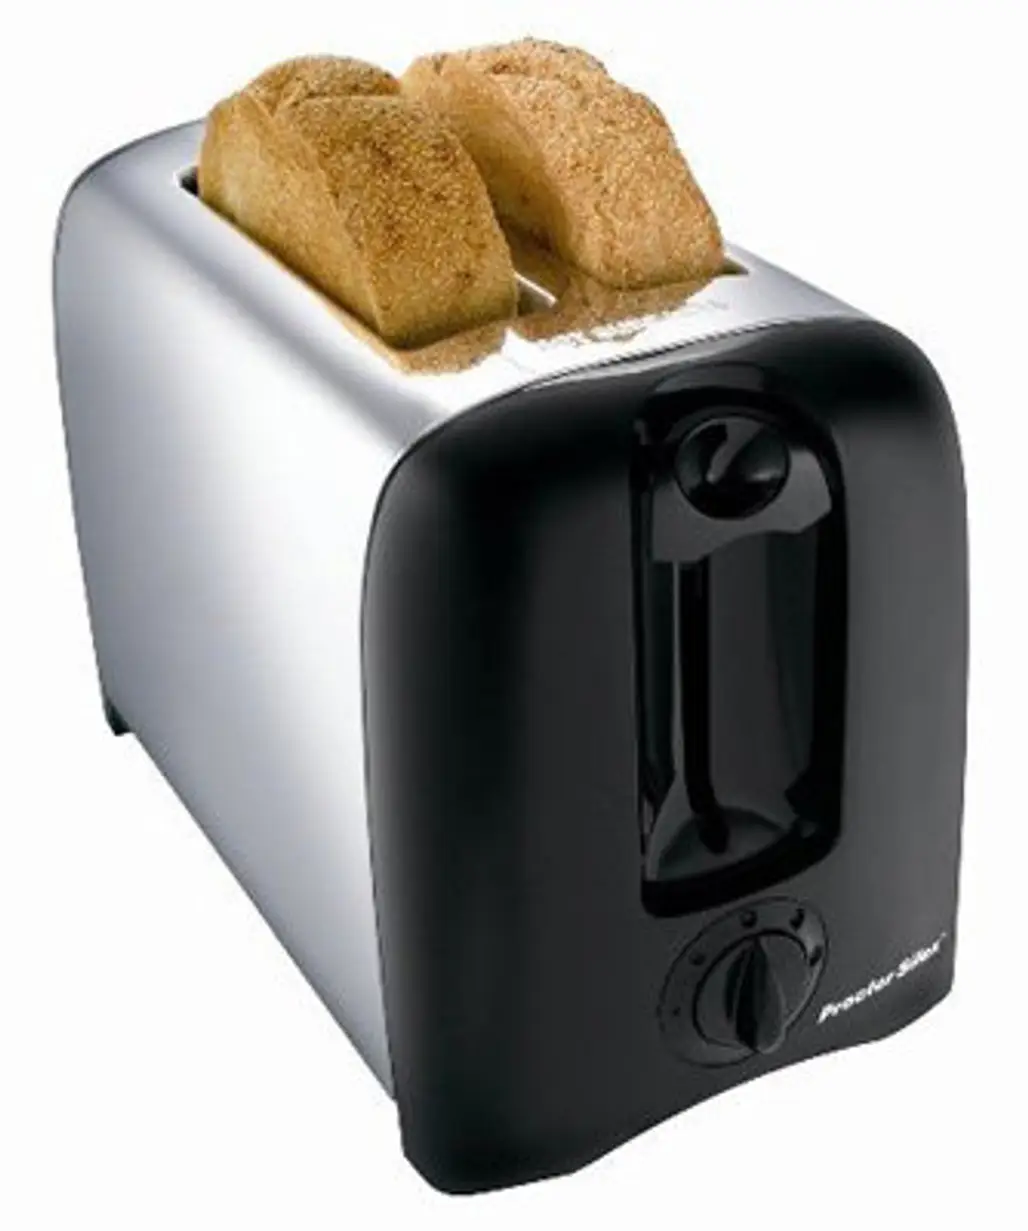 Procter-Silex Toaster